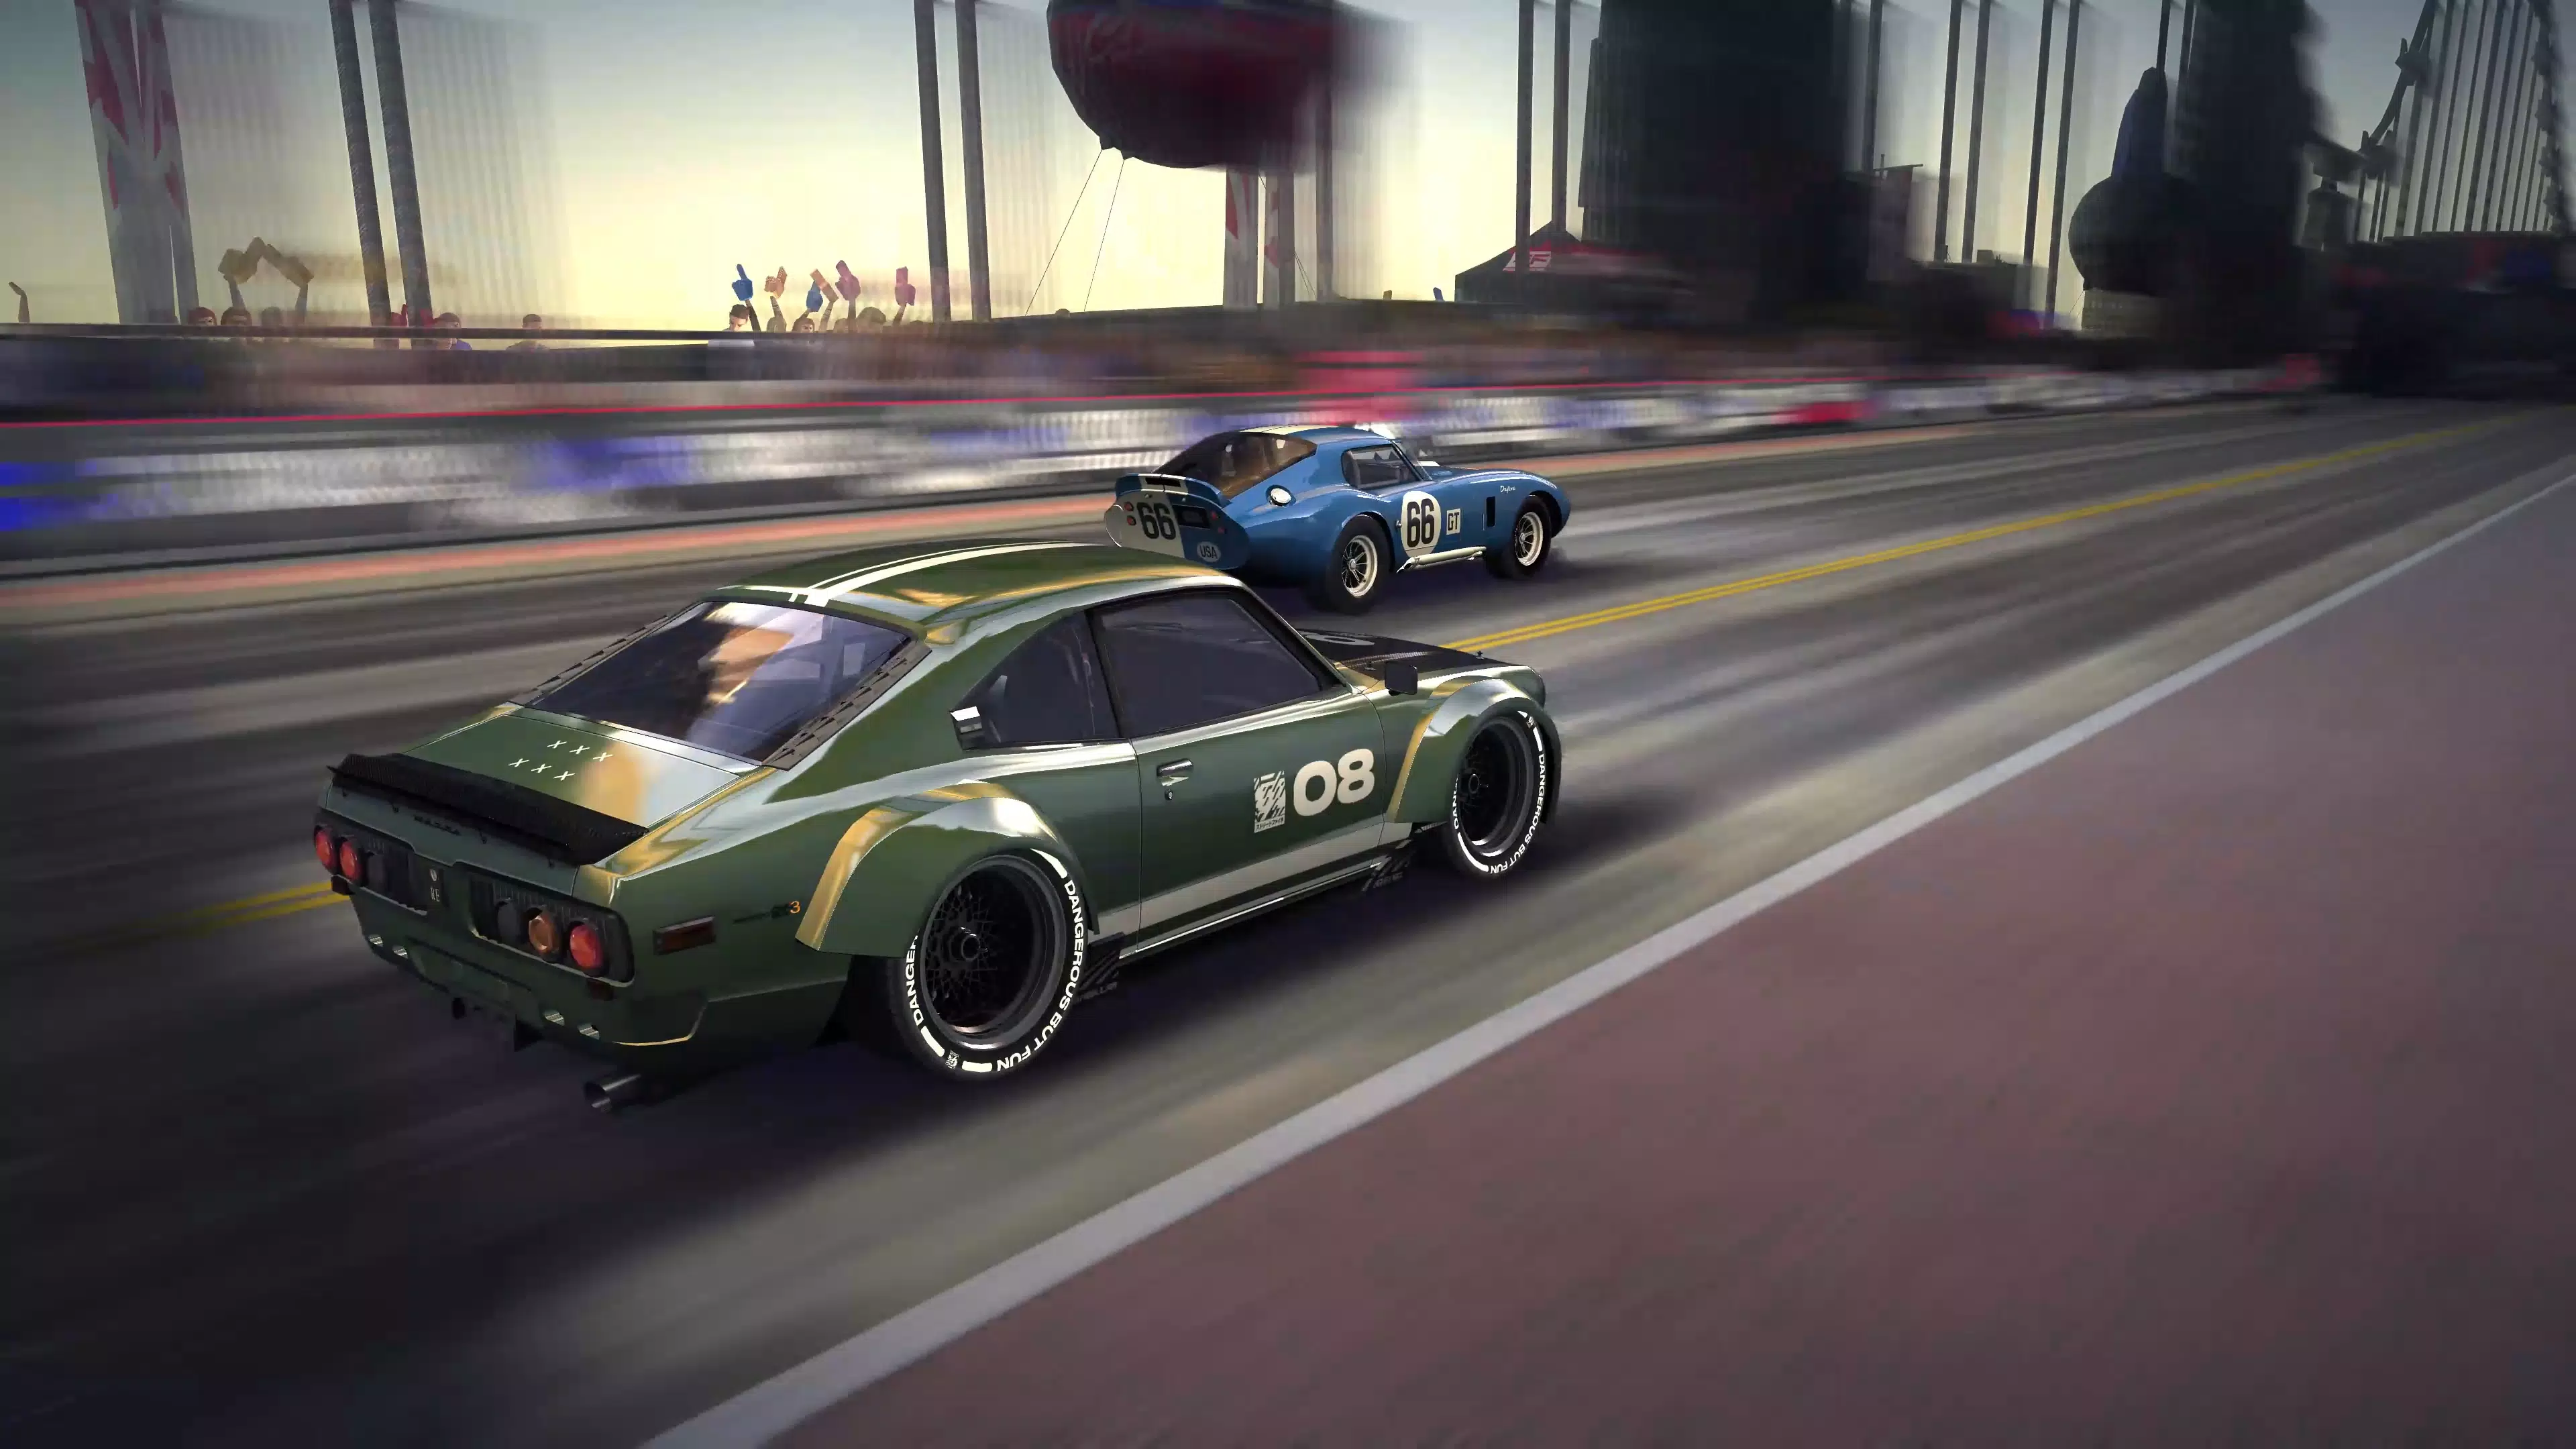 Nitro Car Racing-3D Car Race X - APK Download for Android